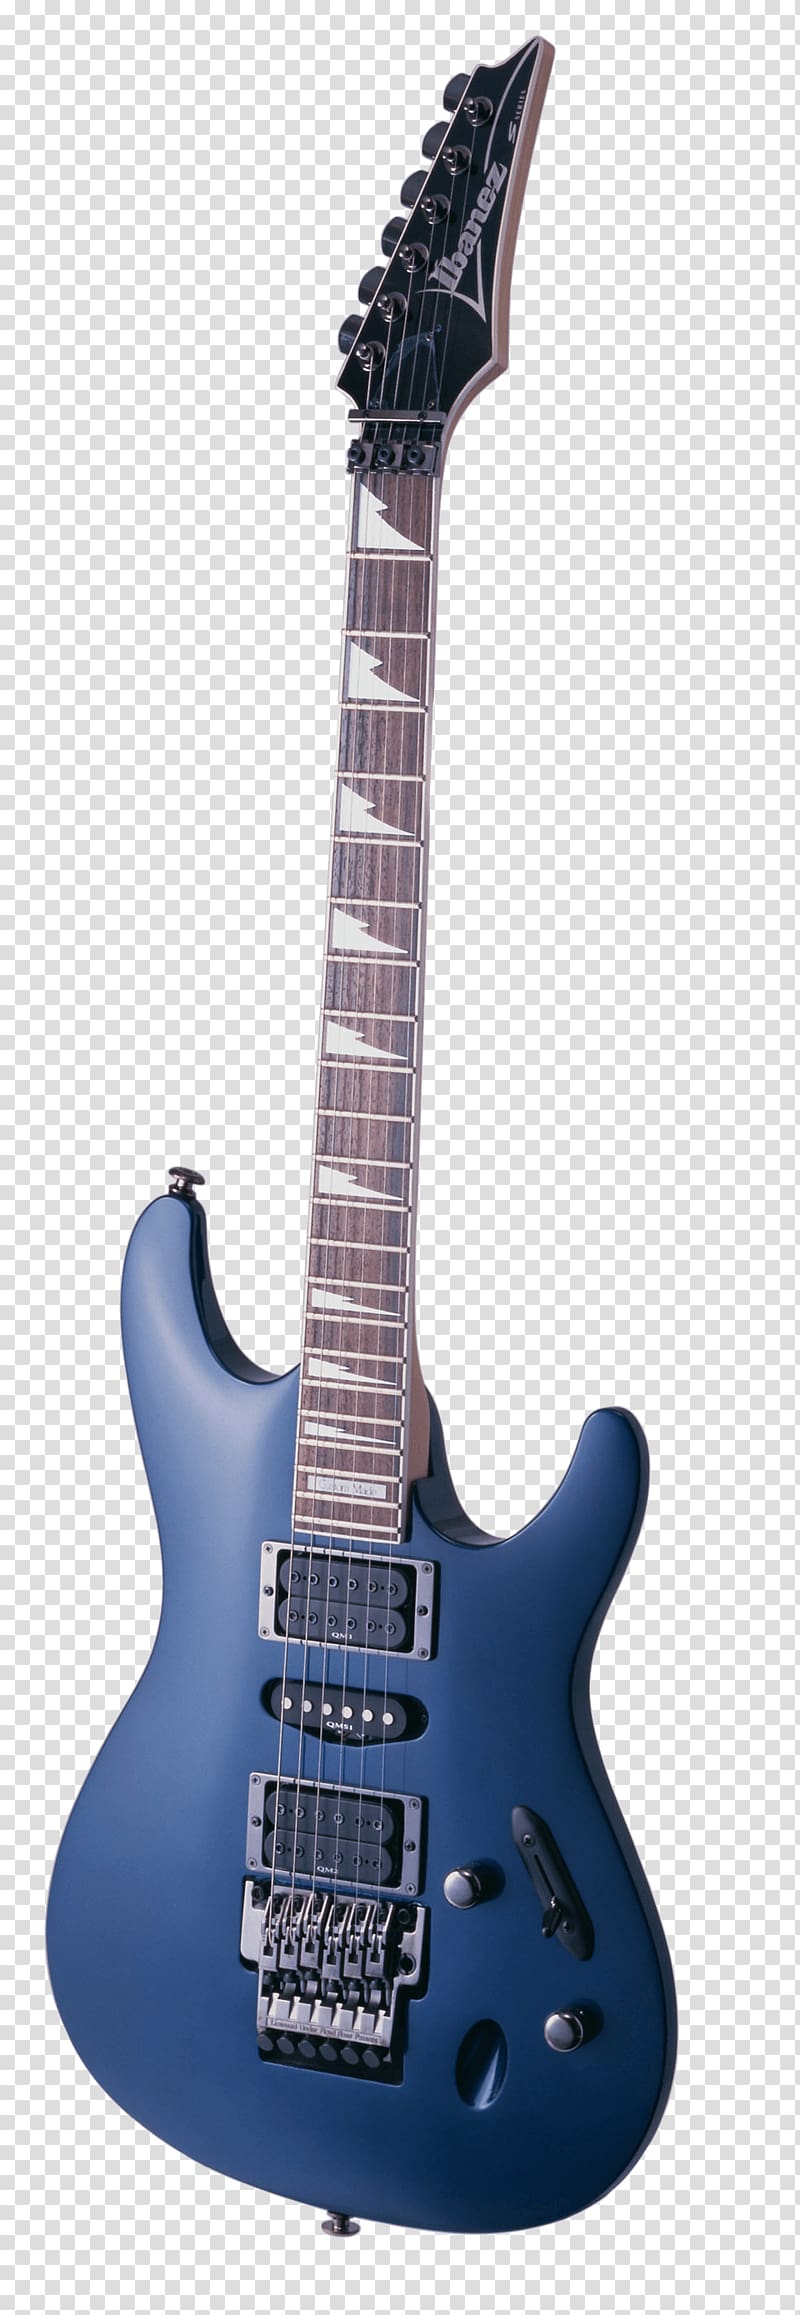 blue electric guitar, Guitar Icon, Guitar transparent background PNG clipart